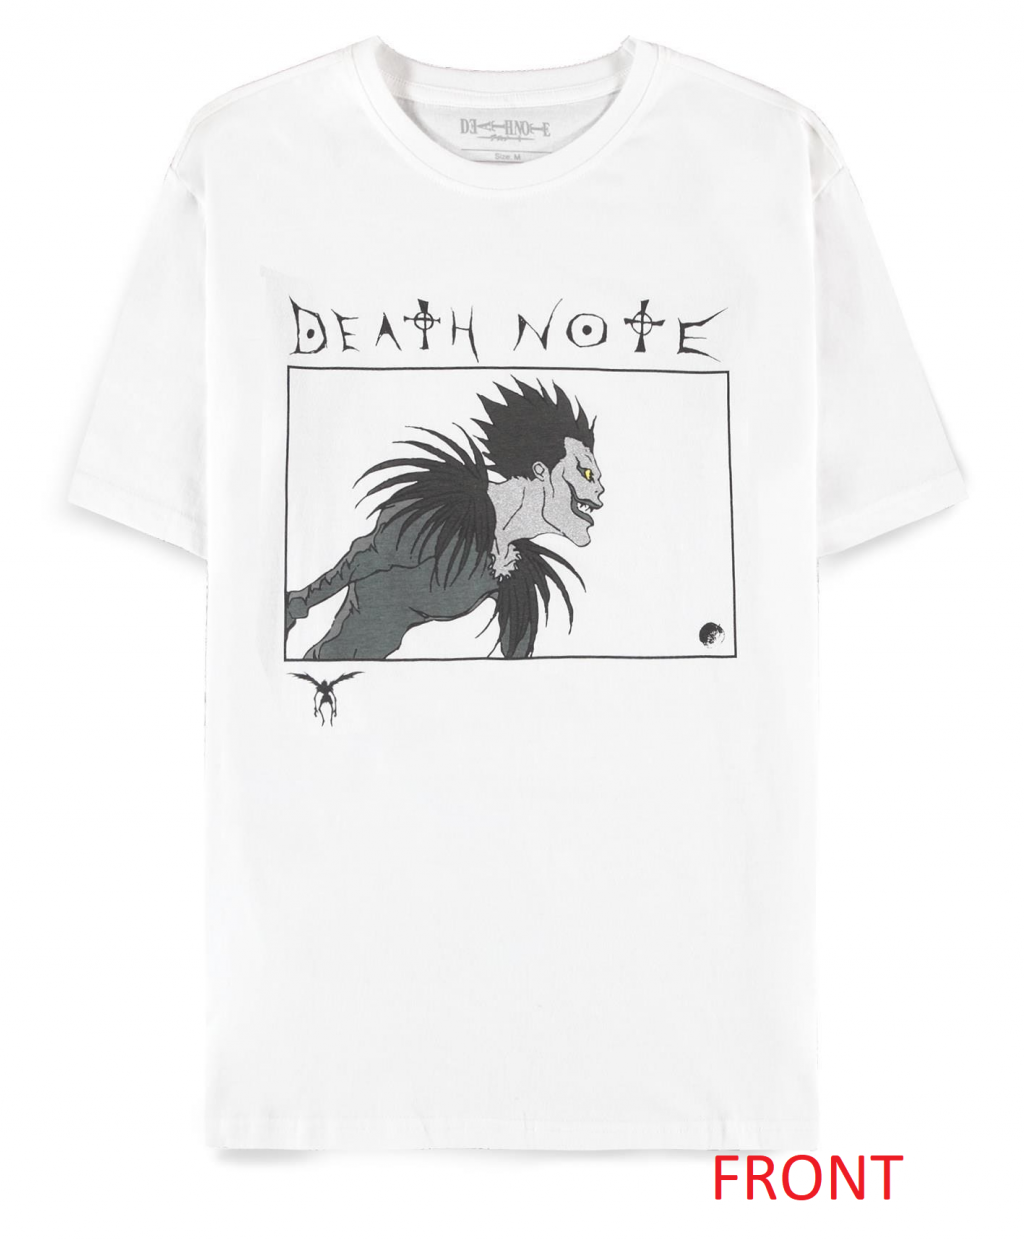 DEATH NOTE - Ryuk Square - Men's White T-Shirt (L)